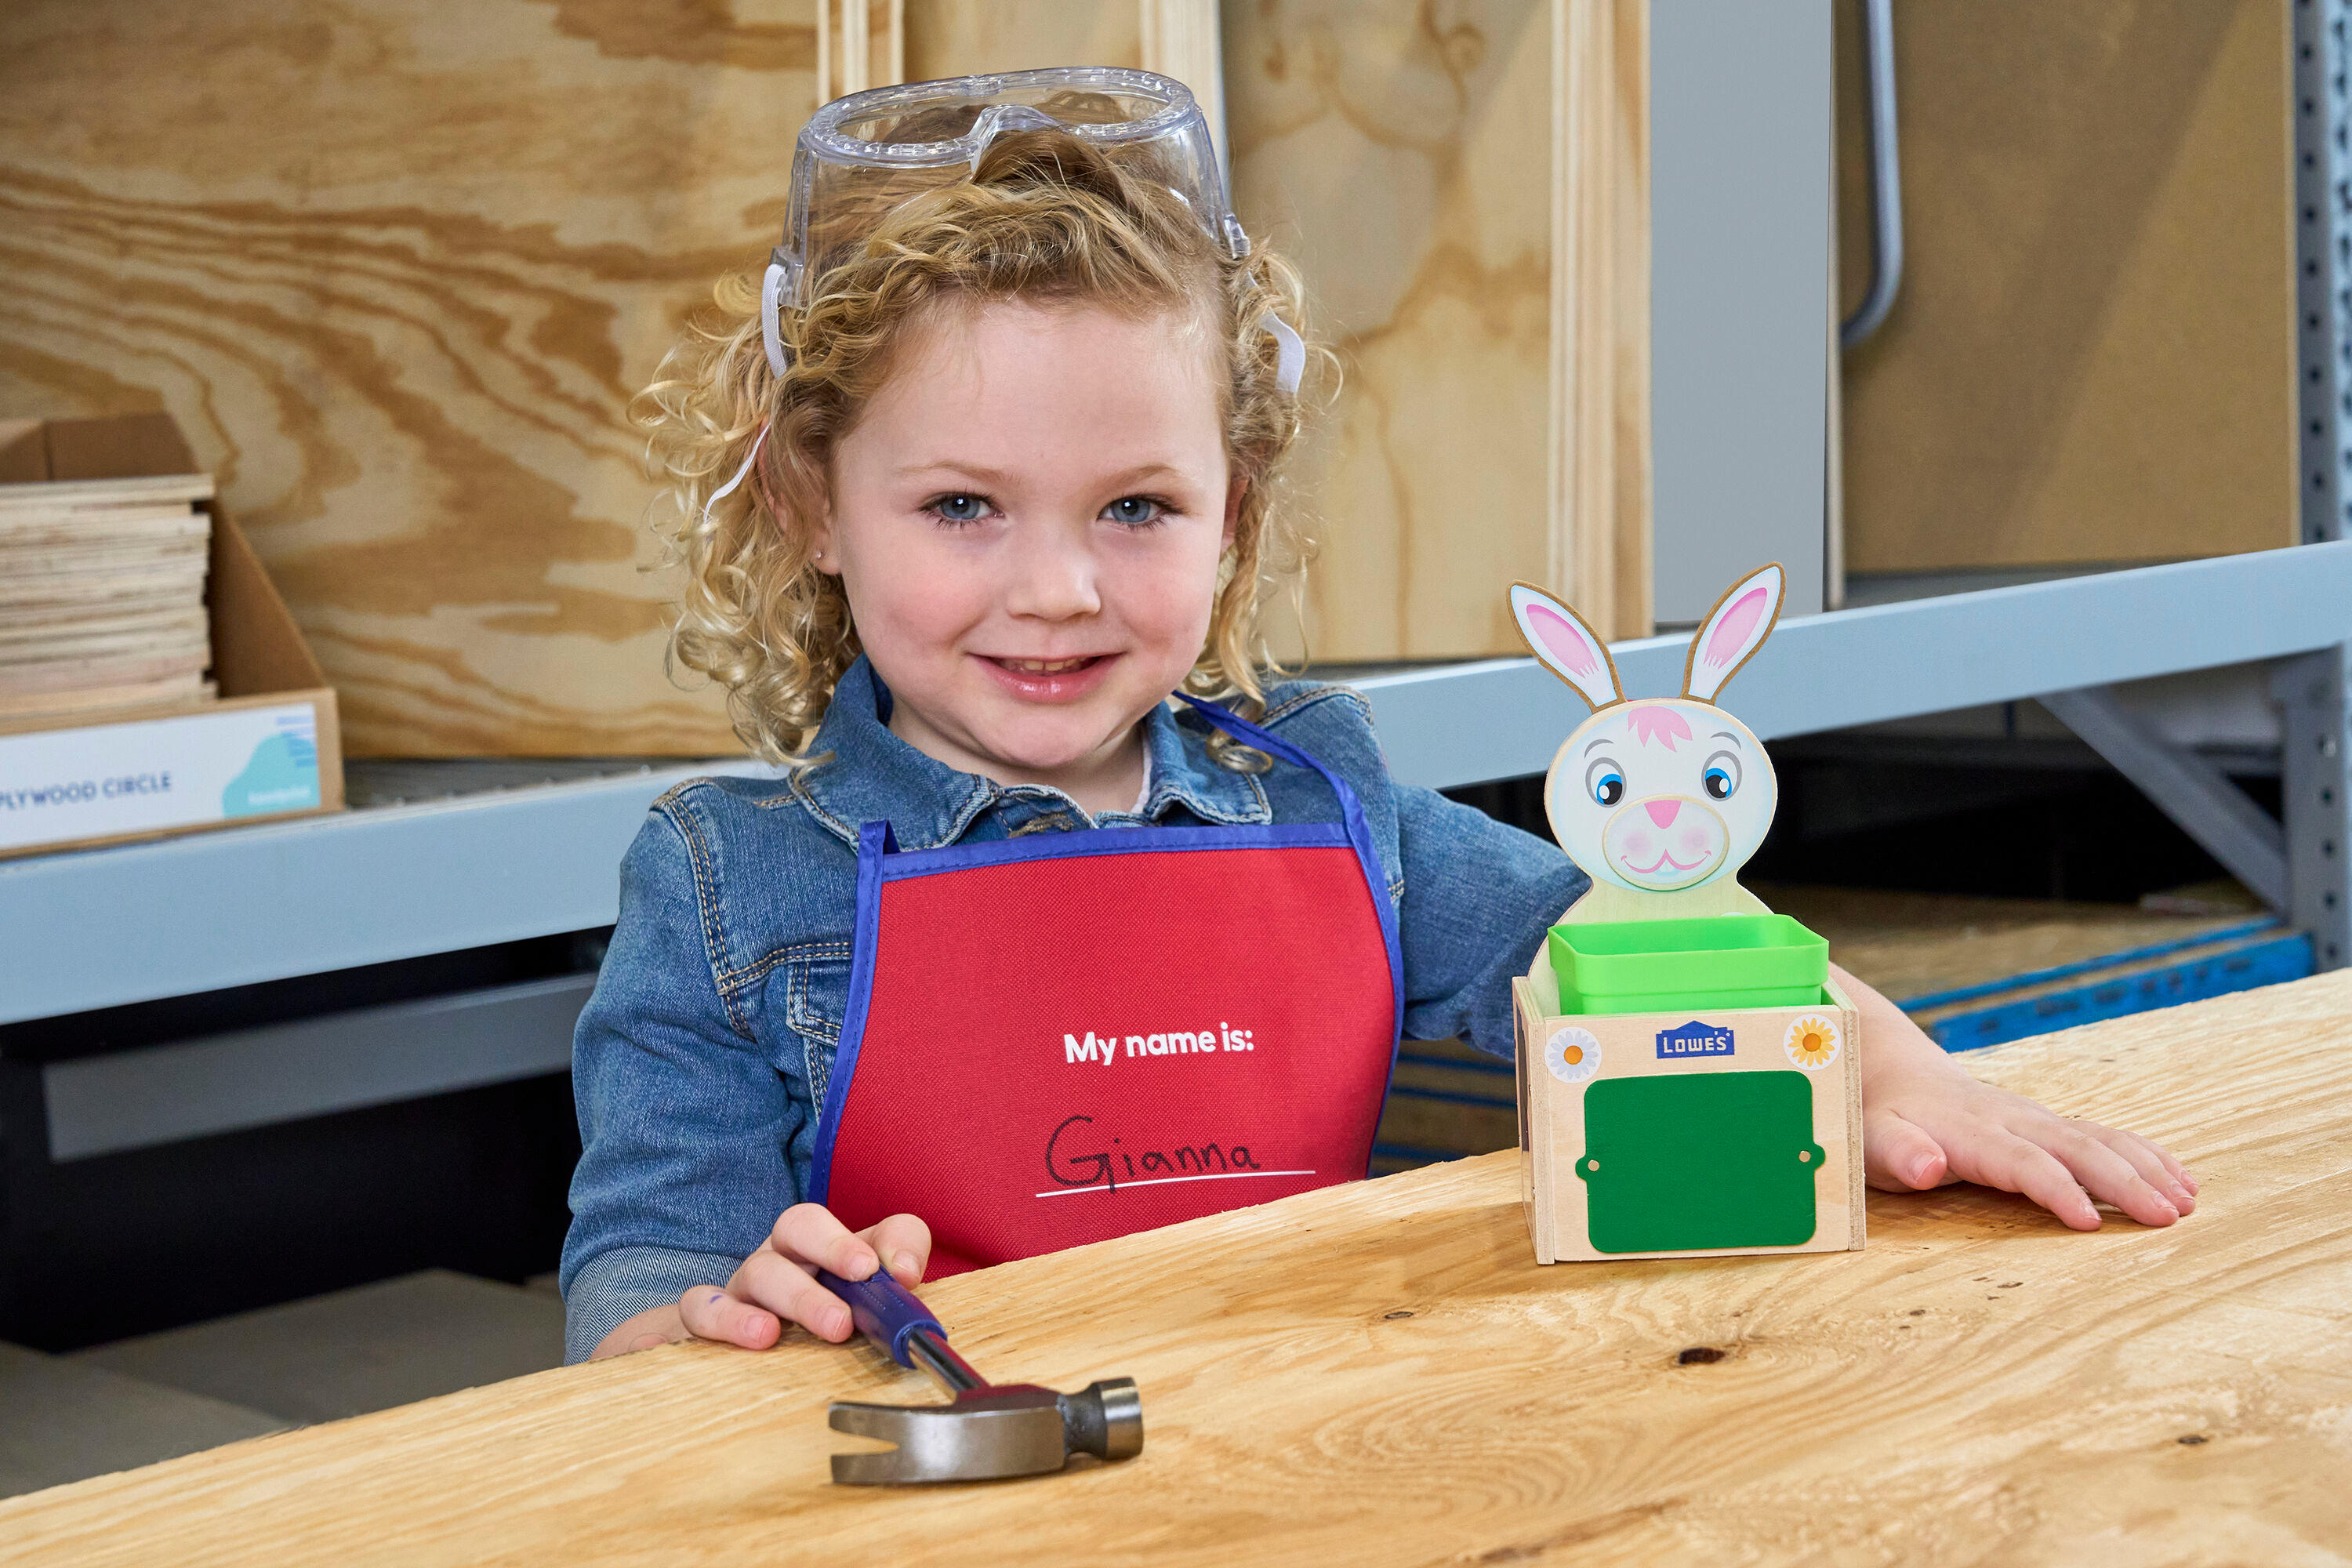 Kids' DIY-U Workshop: Build a Bunny Planter